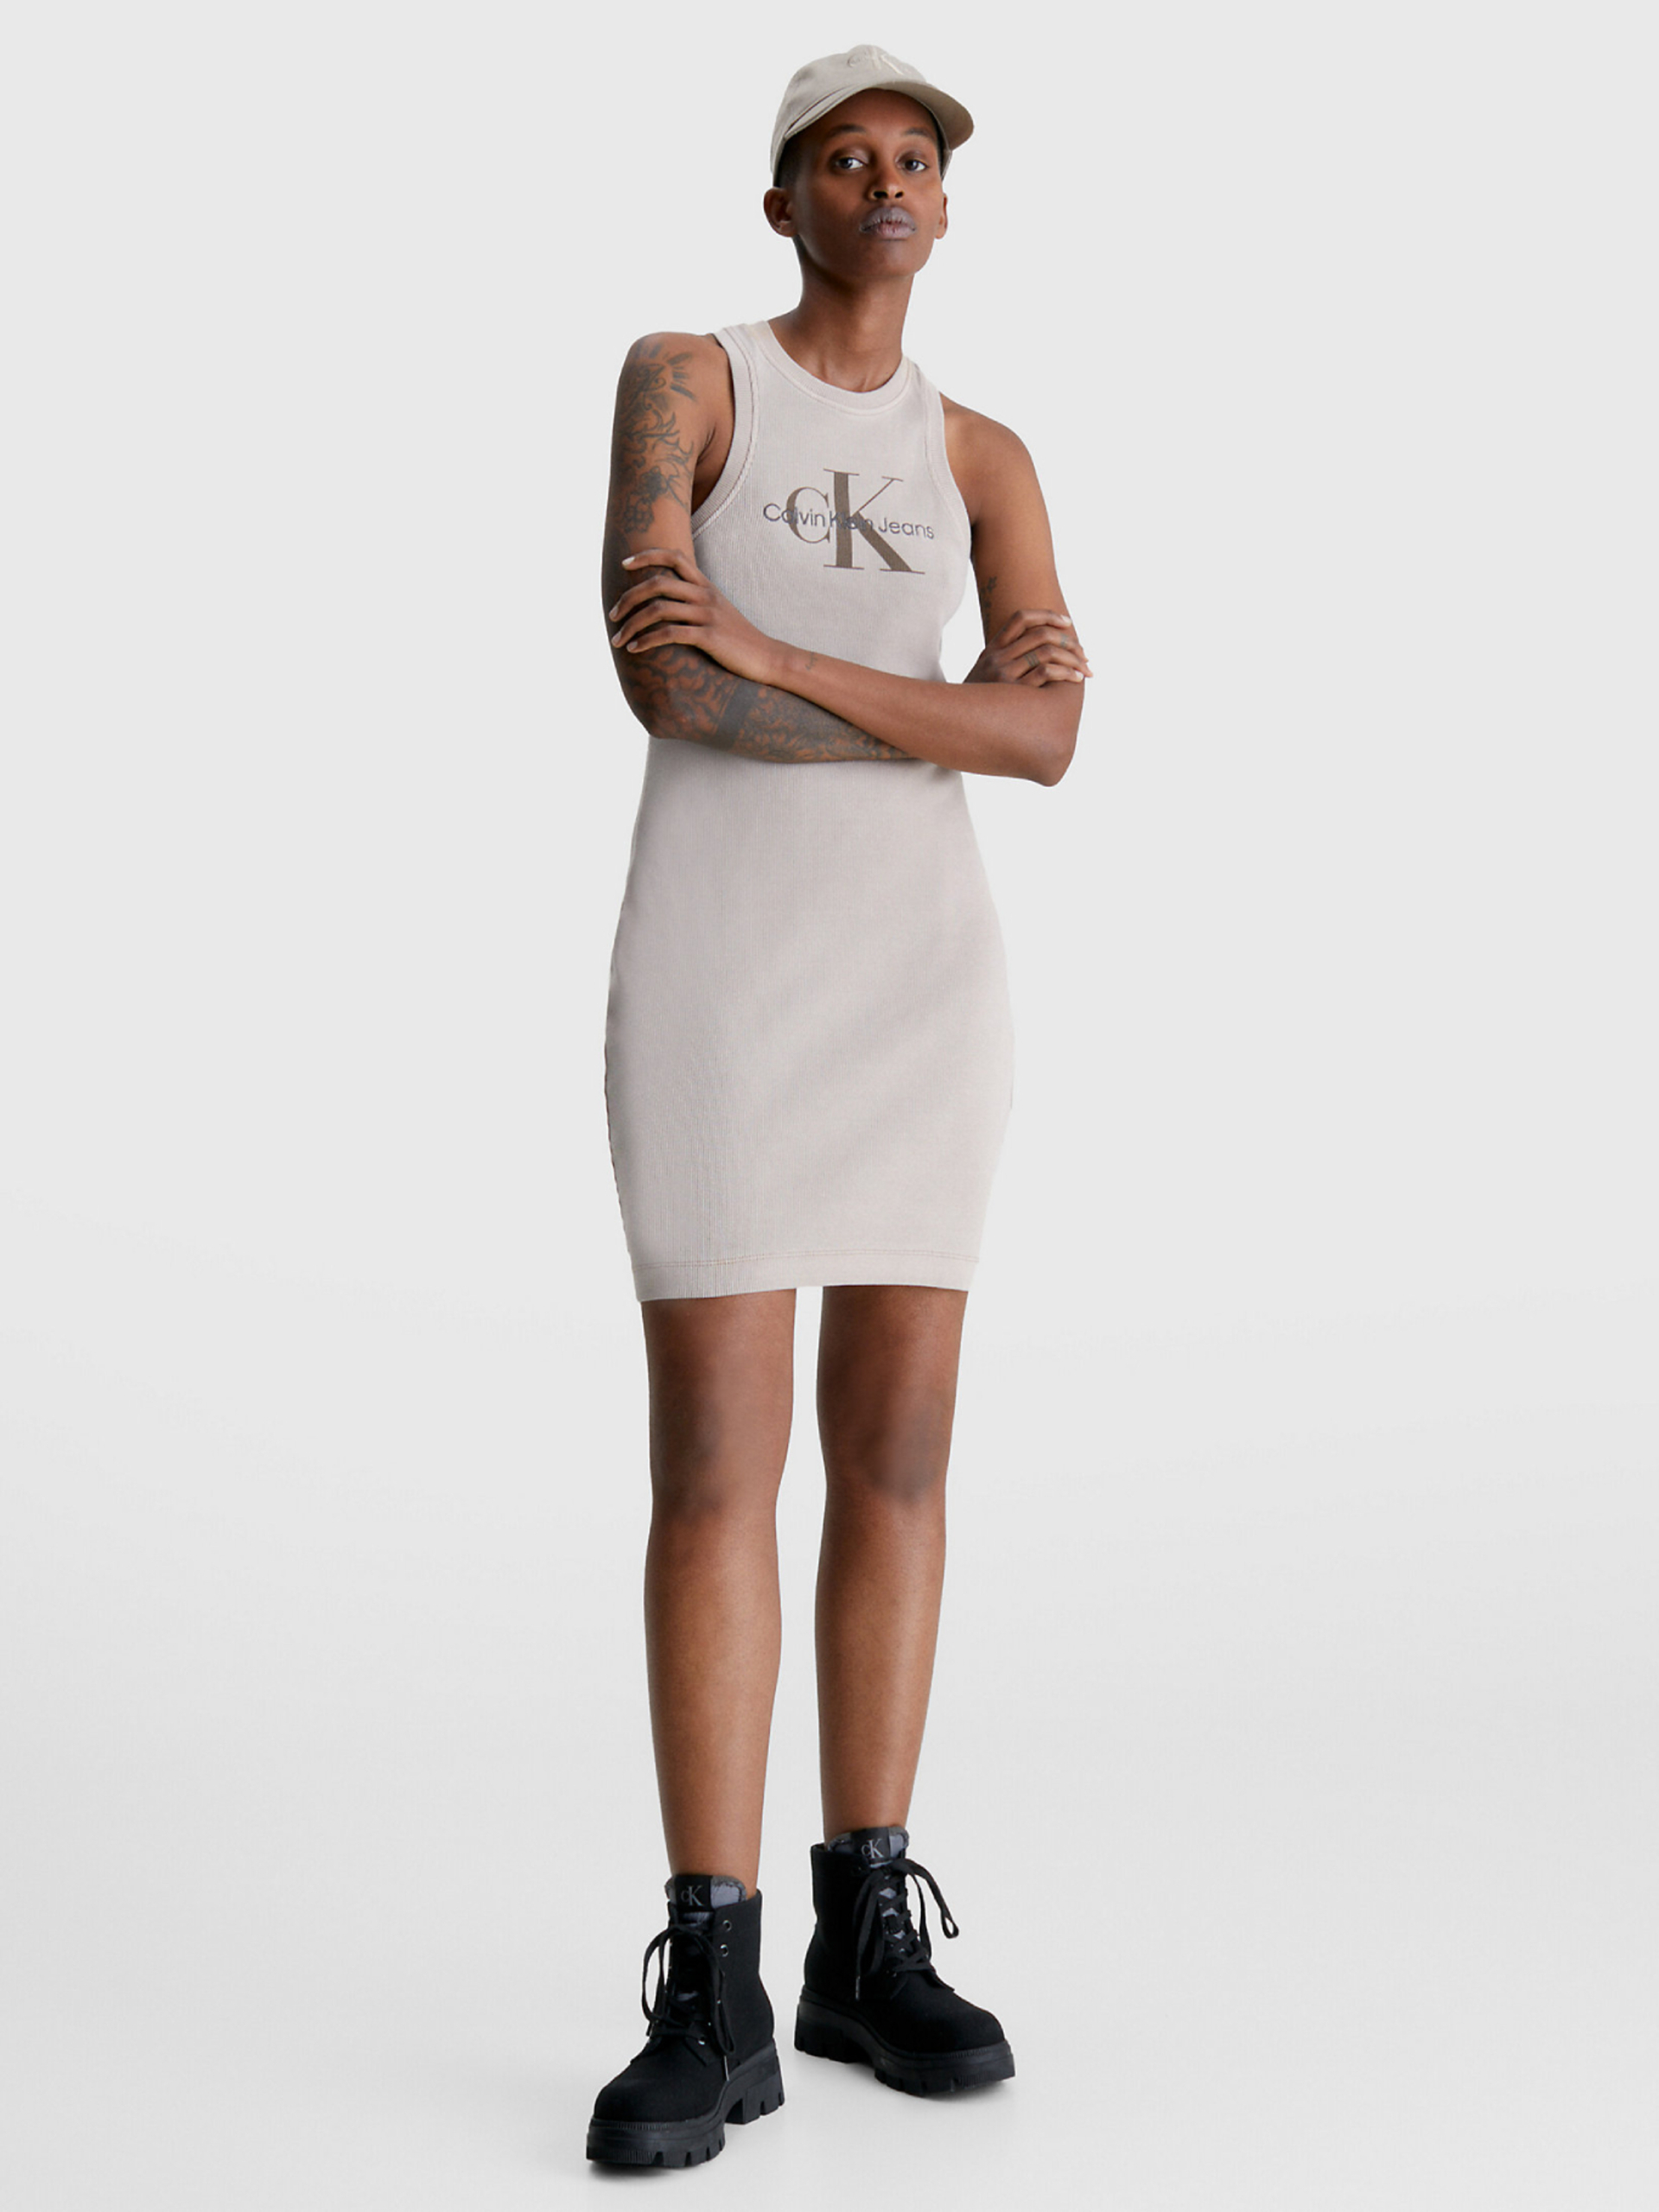 Calvin Klein dámské béžové šaty MINERAL DYE RIB TANK DRESS - M (PE5)